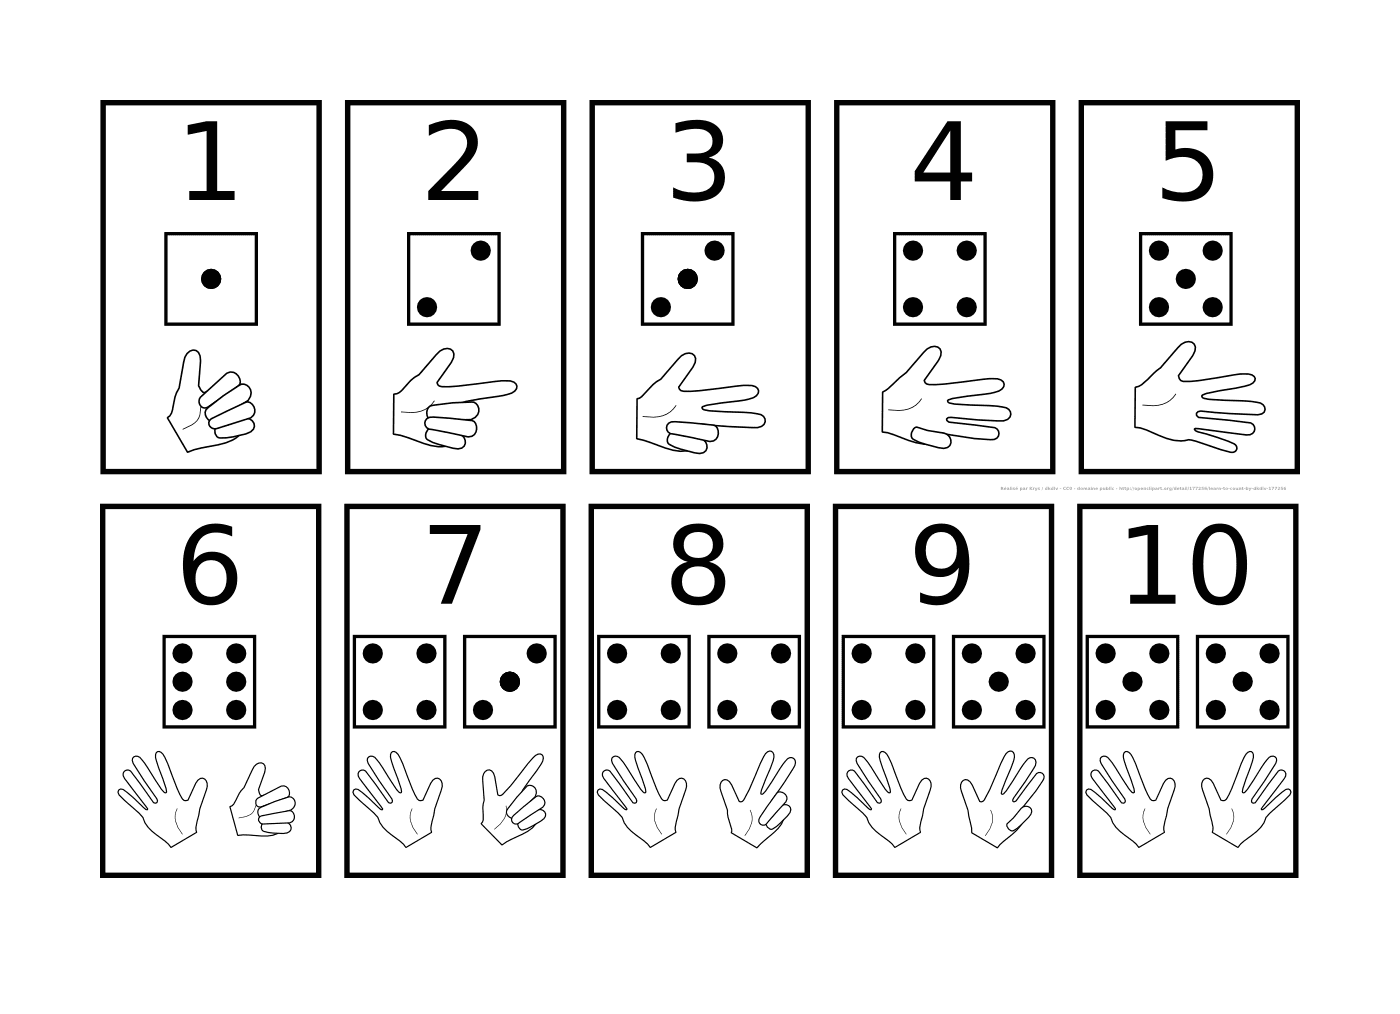  Карточка с номерами и символами 